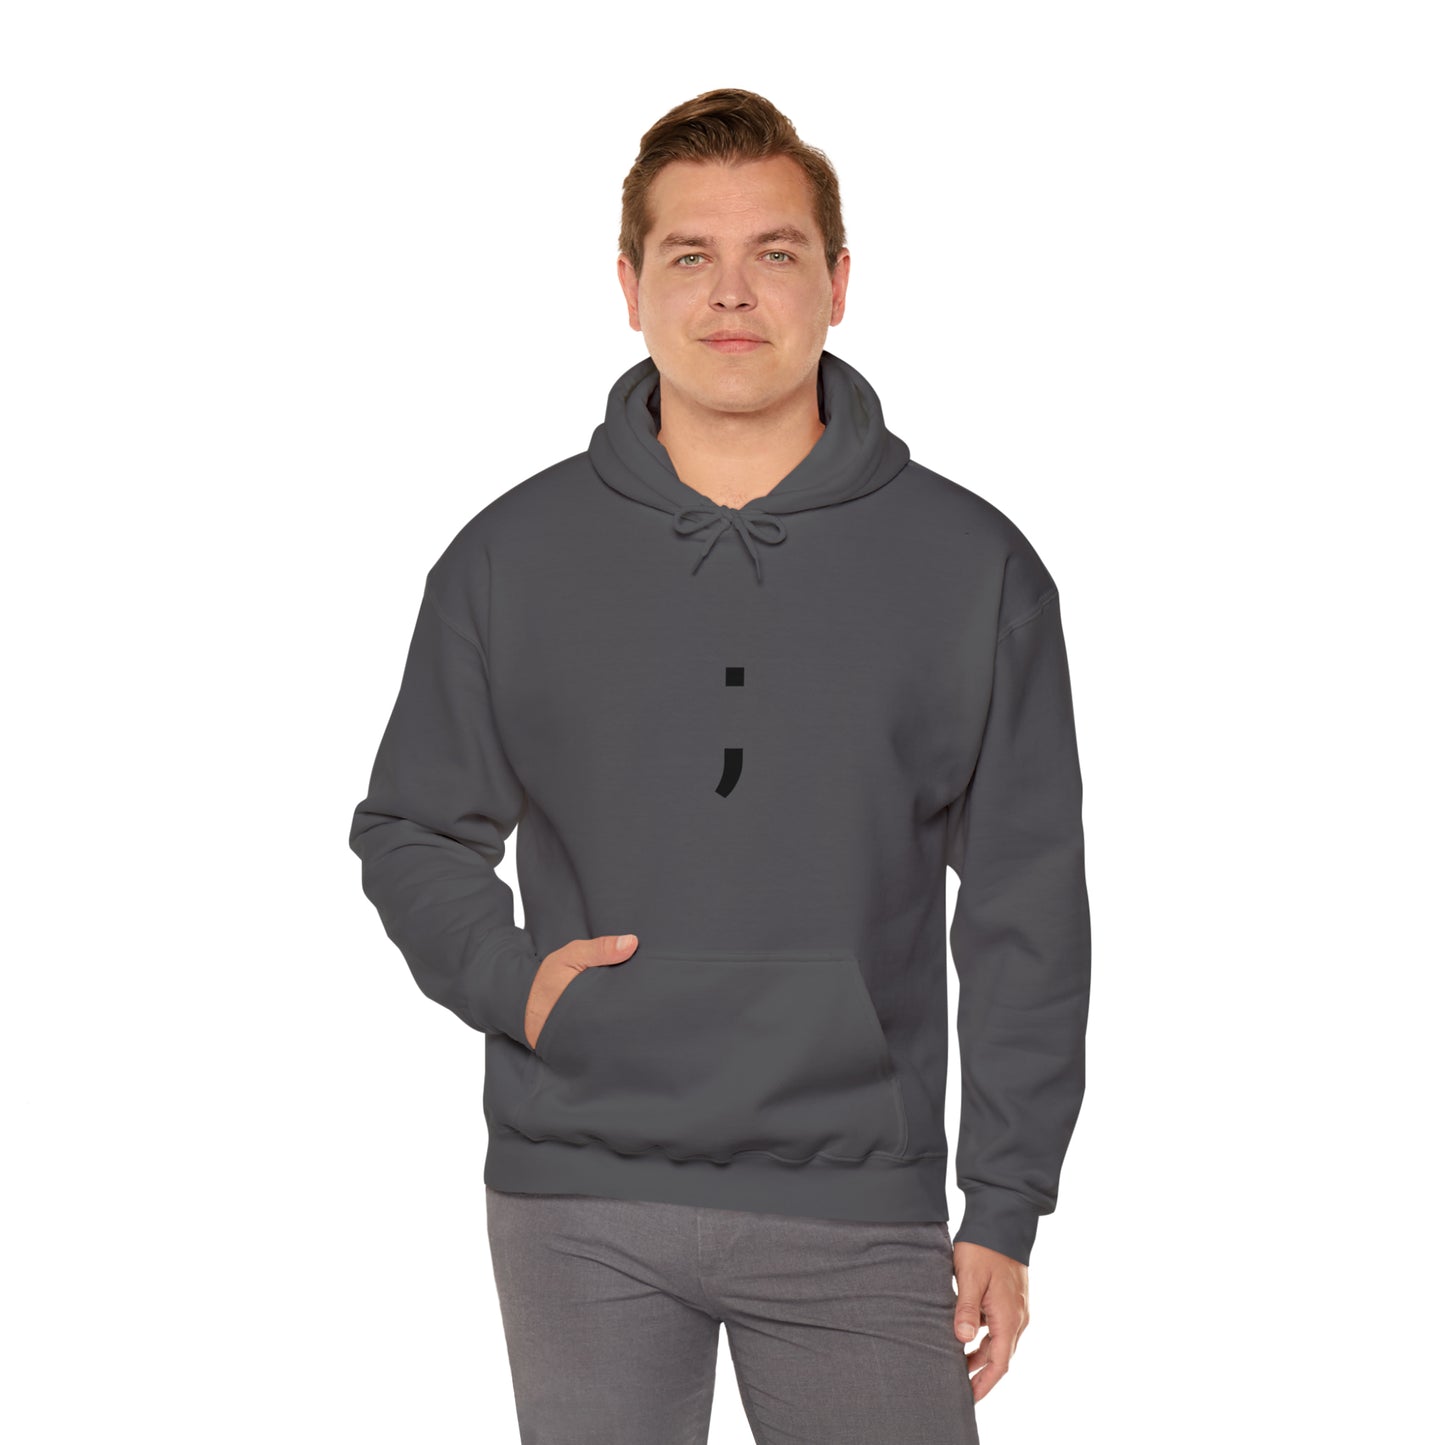 Semicolon hoodie You Got This